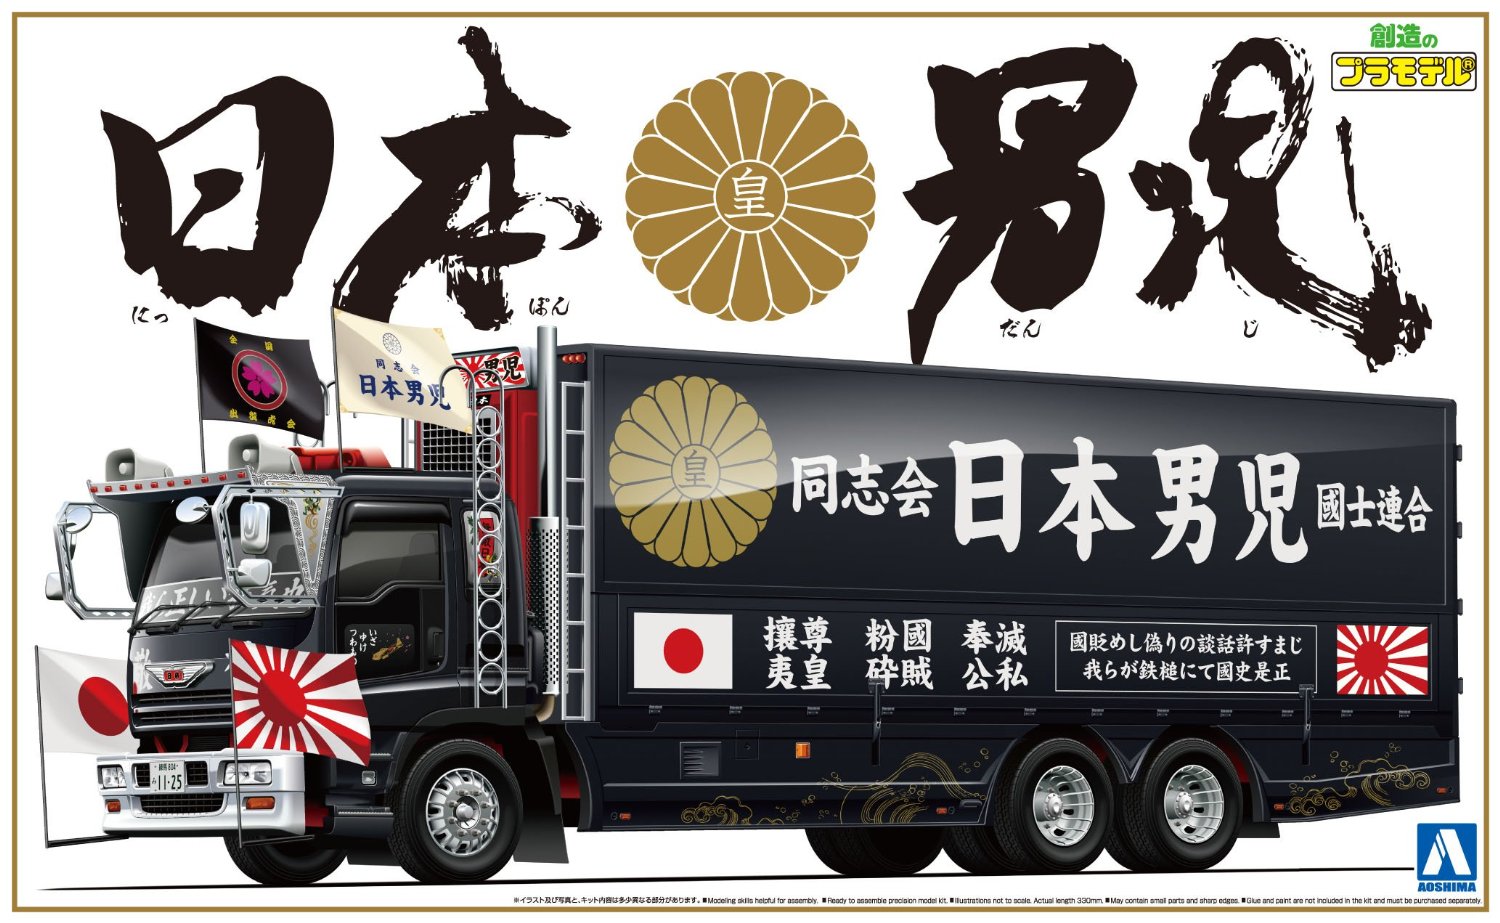 Nippon Danji (right wing truck)